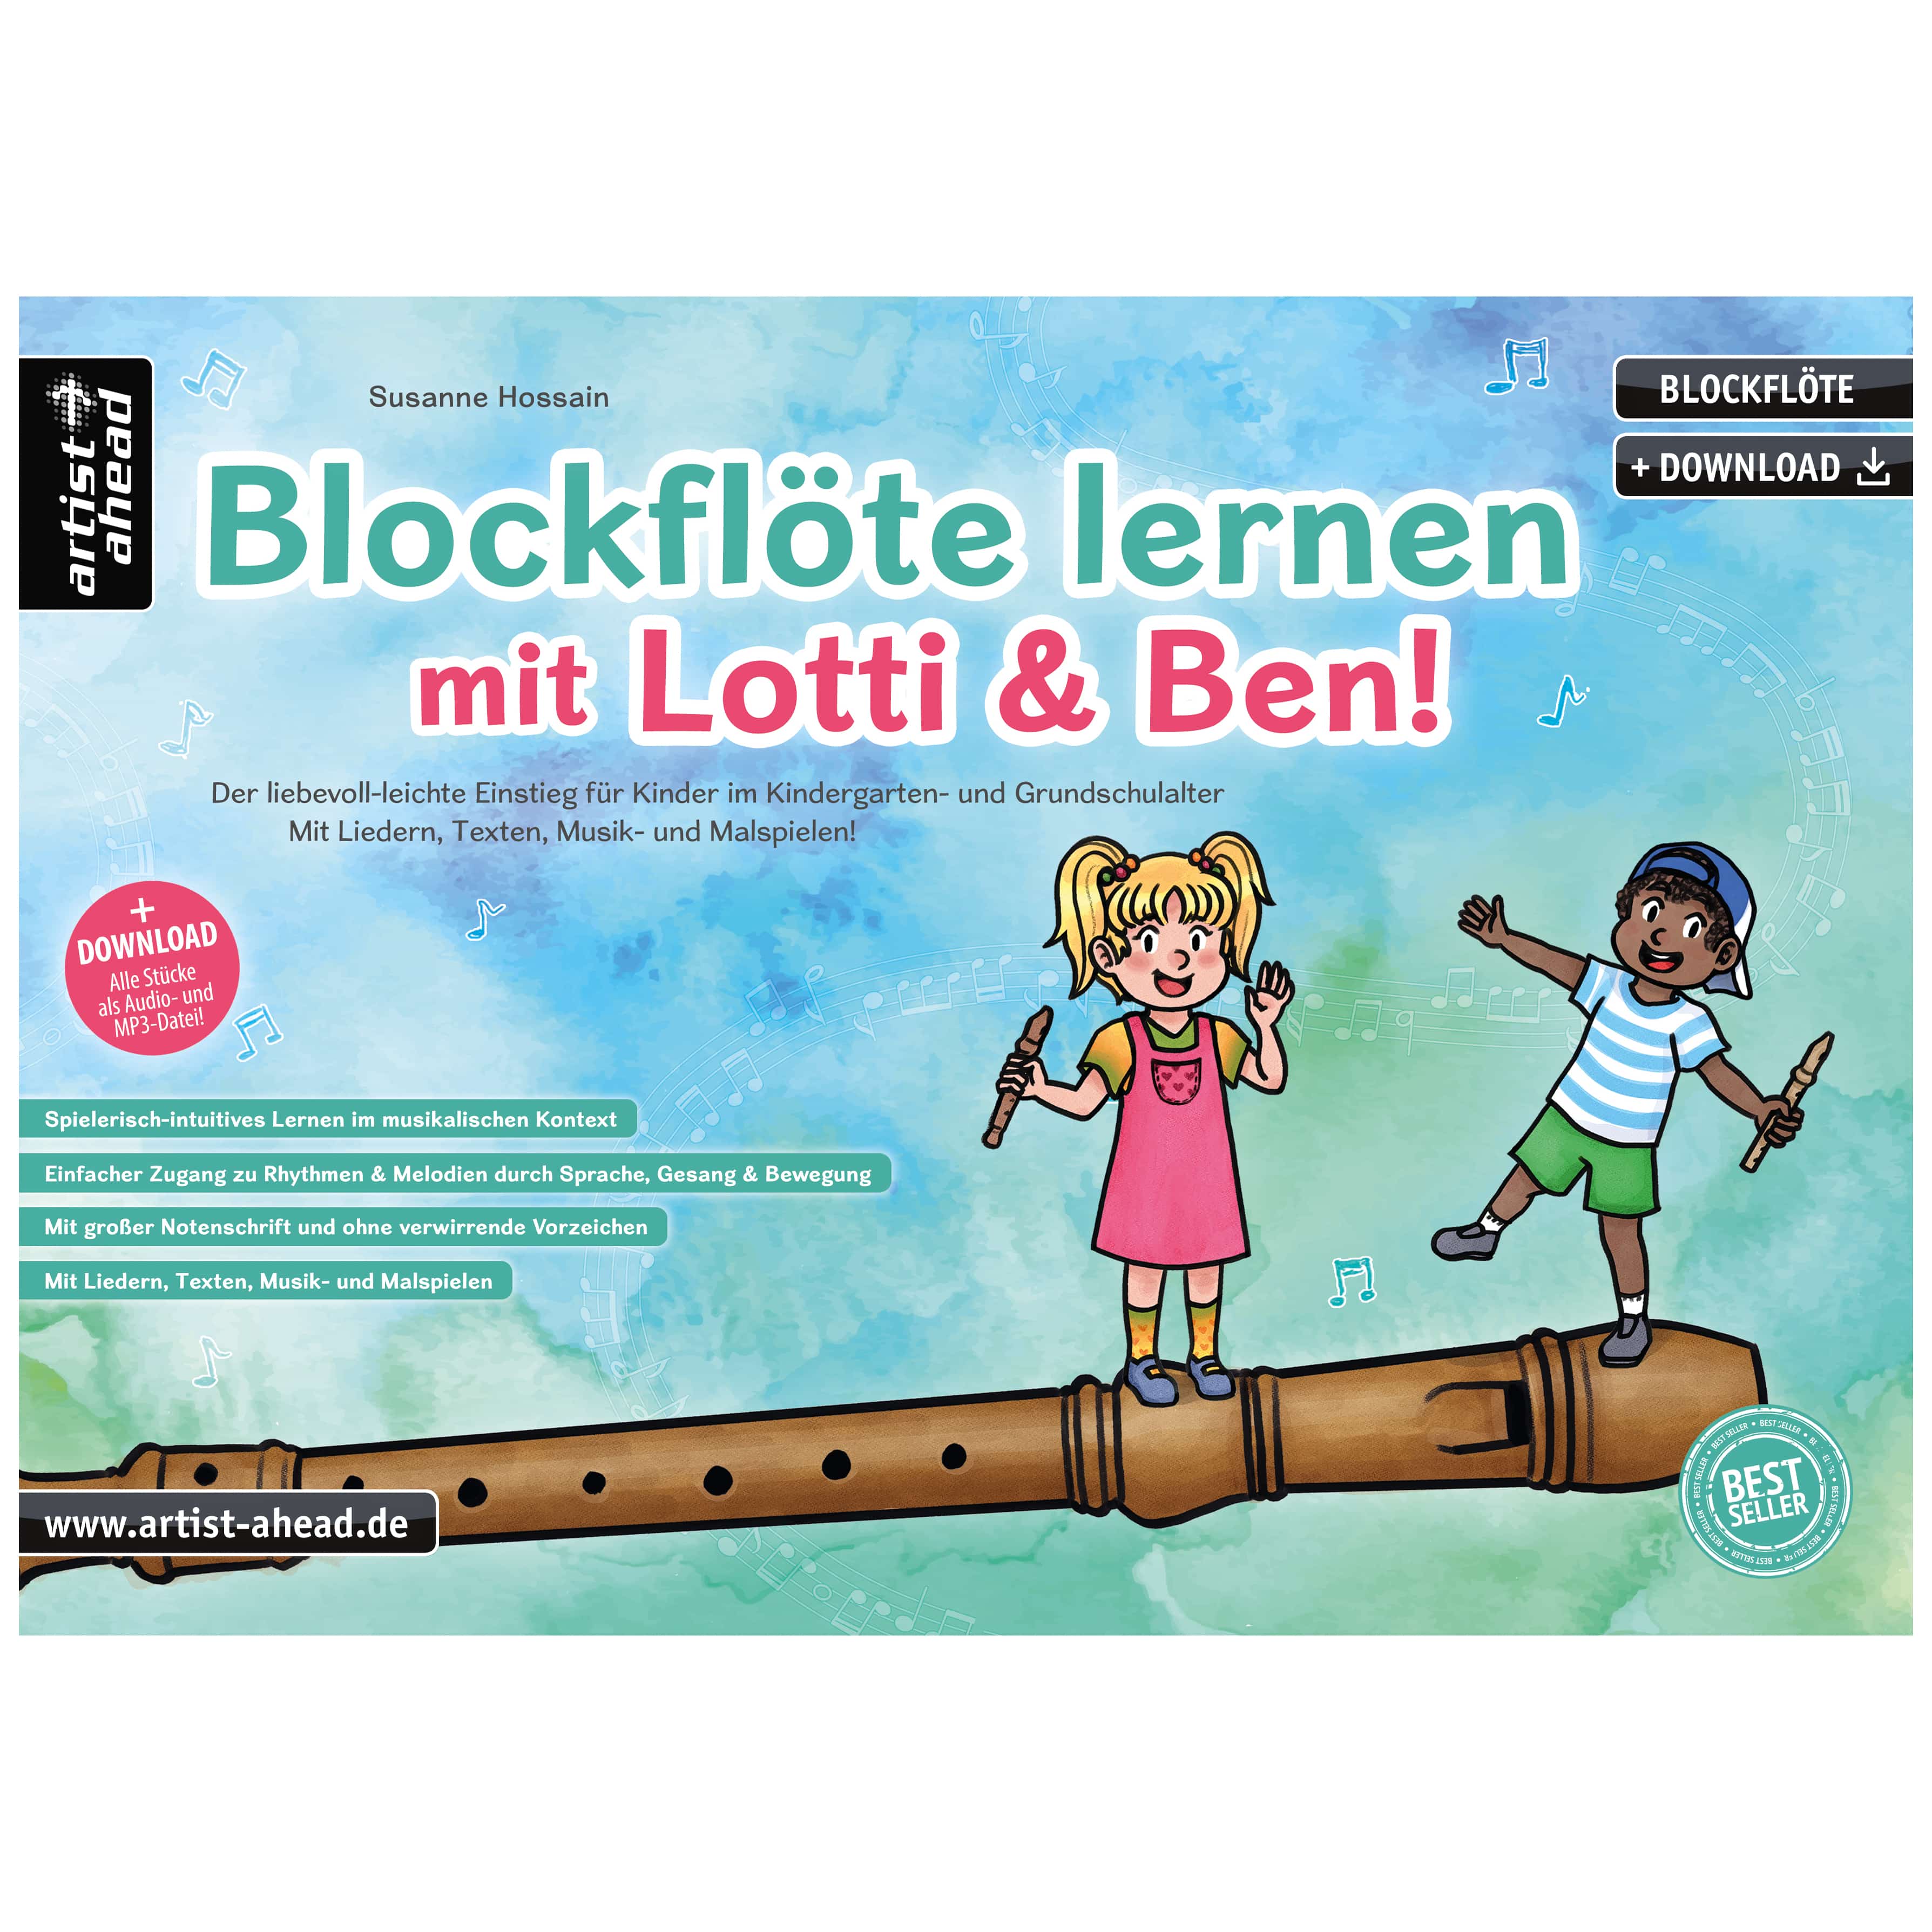 Artist Ahead Blockflöte lernen mit Lotti & Ben! - Susanne Hossa in